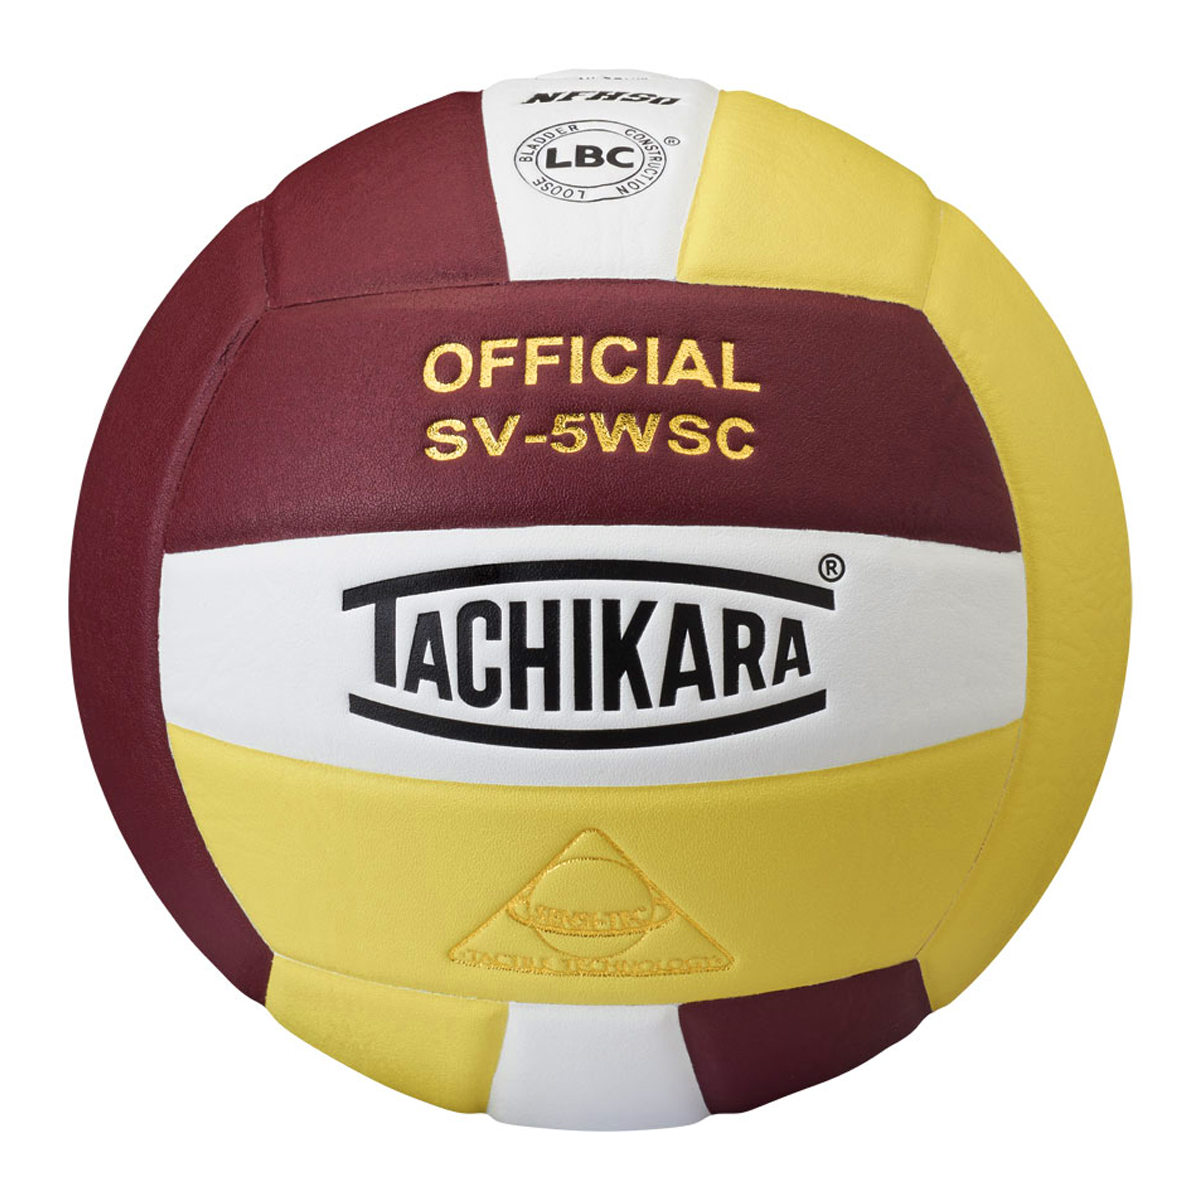 Tachikara SV5WSC Composite Volleyball-Cardinal, White, Vintage-Gold